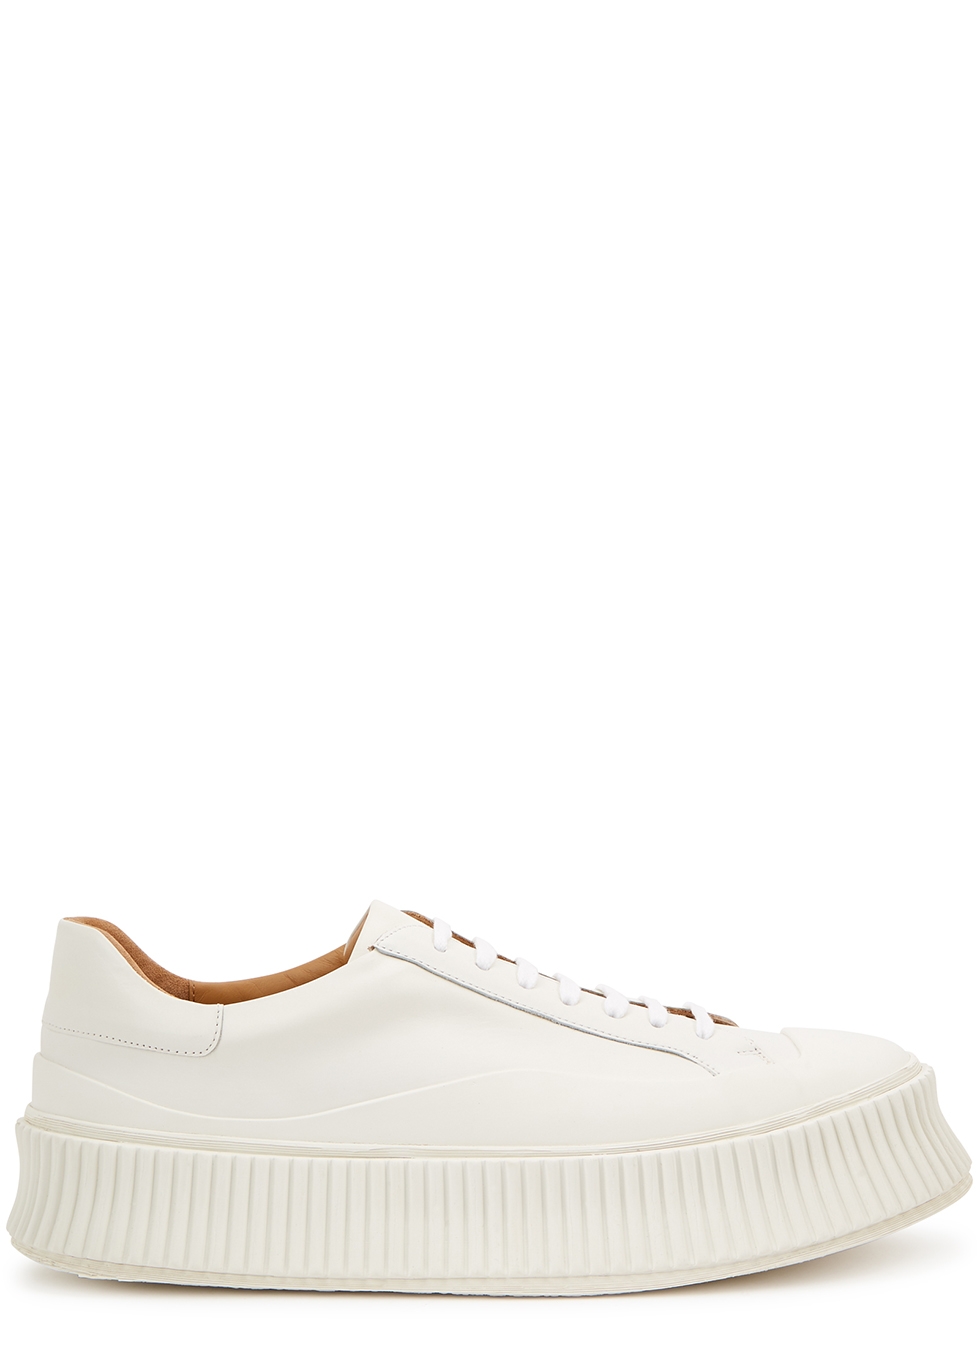 Jil Sander Off-white leather flatform sneakers